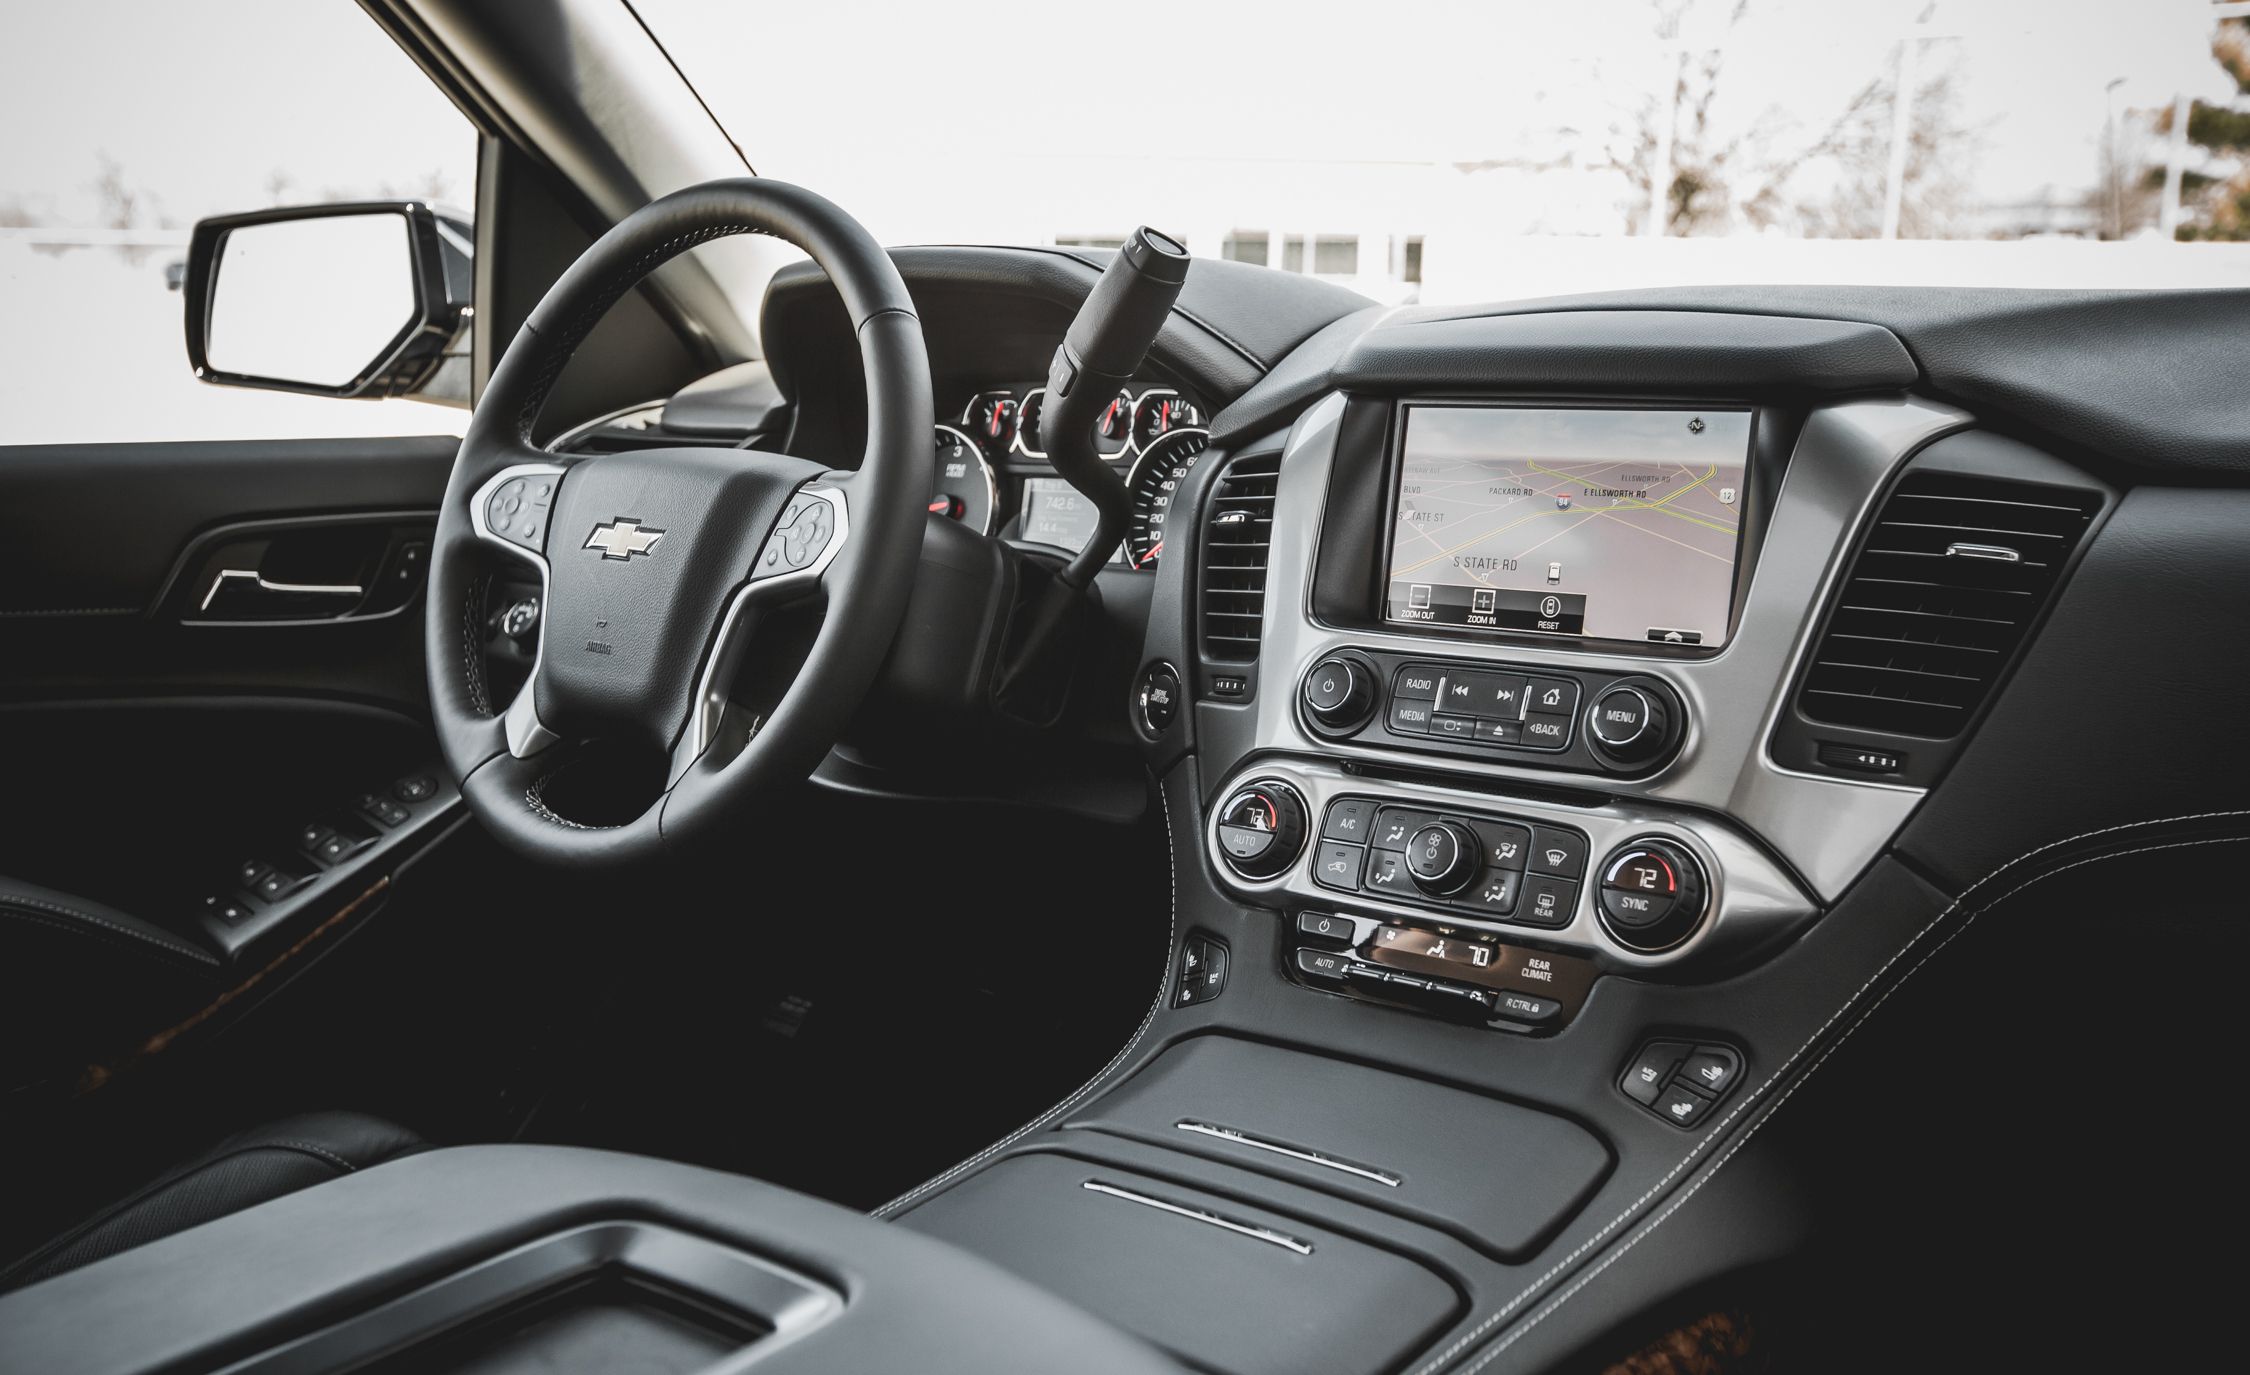 2015 Chevrolet Suburban Ltz Interior (View 19 of 33)